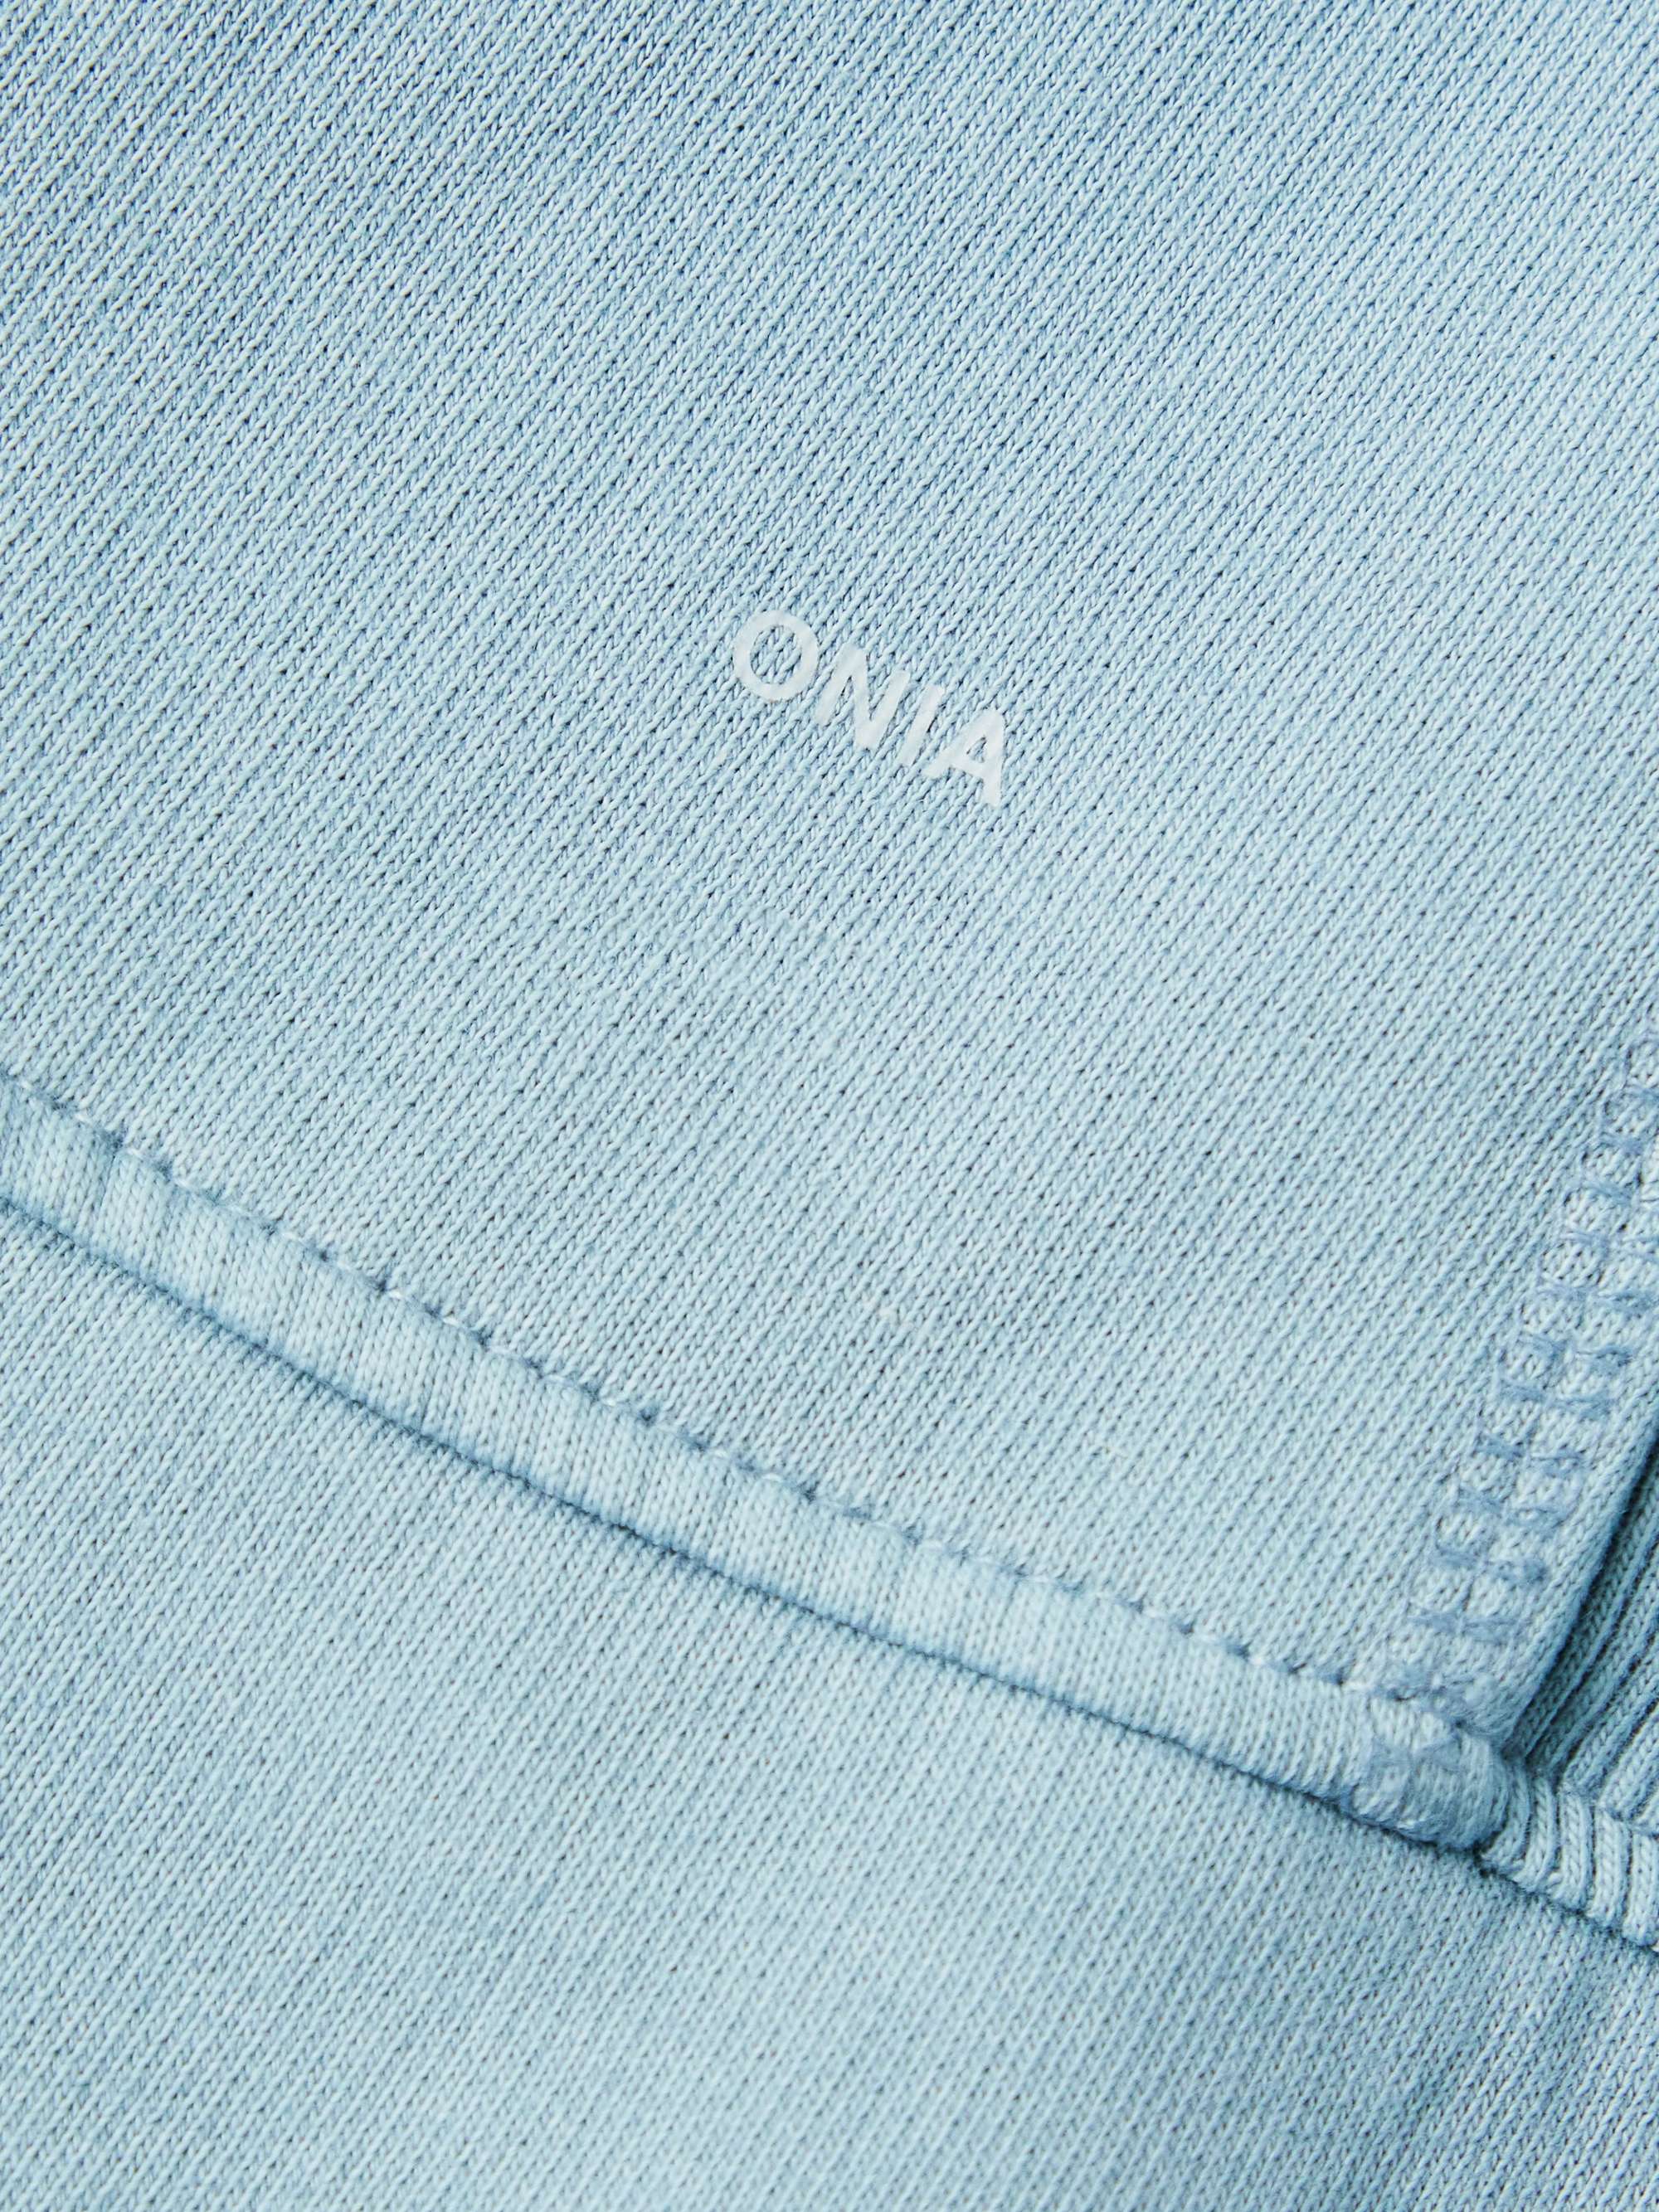 ONIA Garment-Dyed Cotton-Jersey Half-Zip Sweatshirt